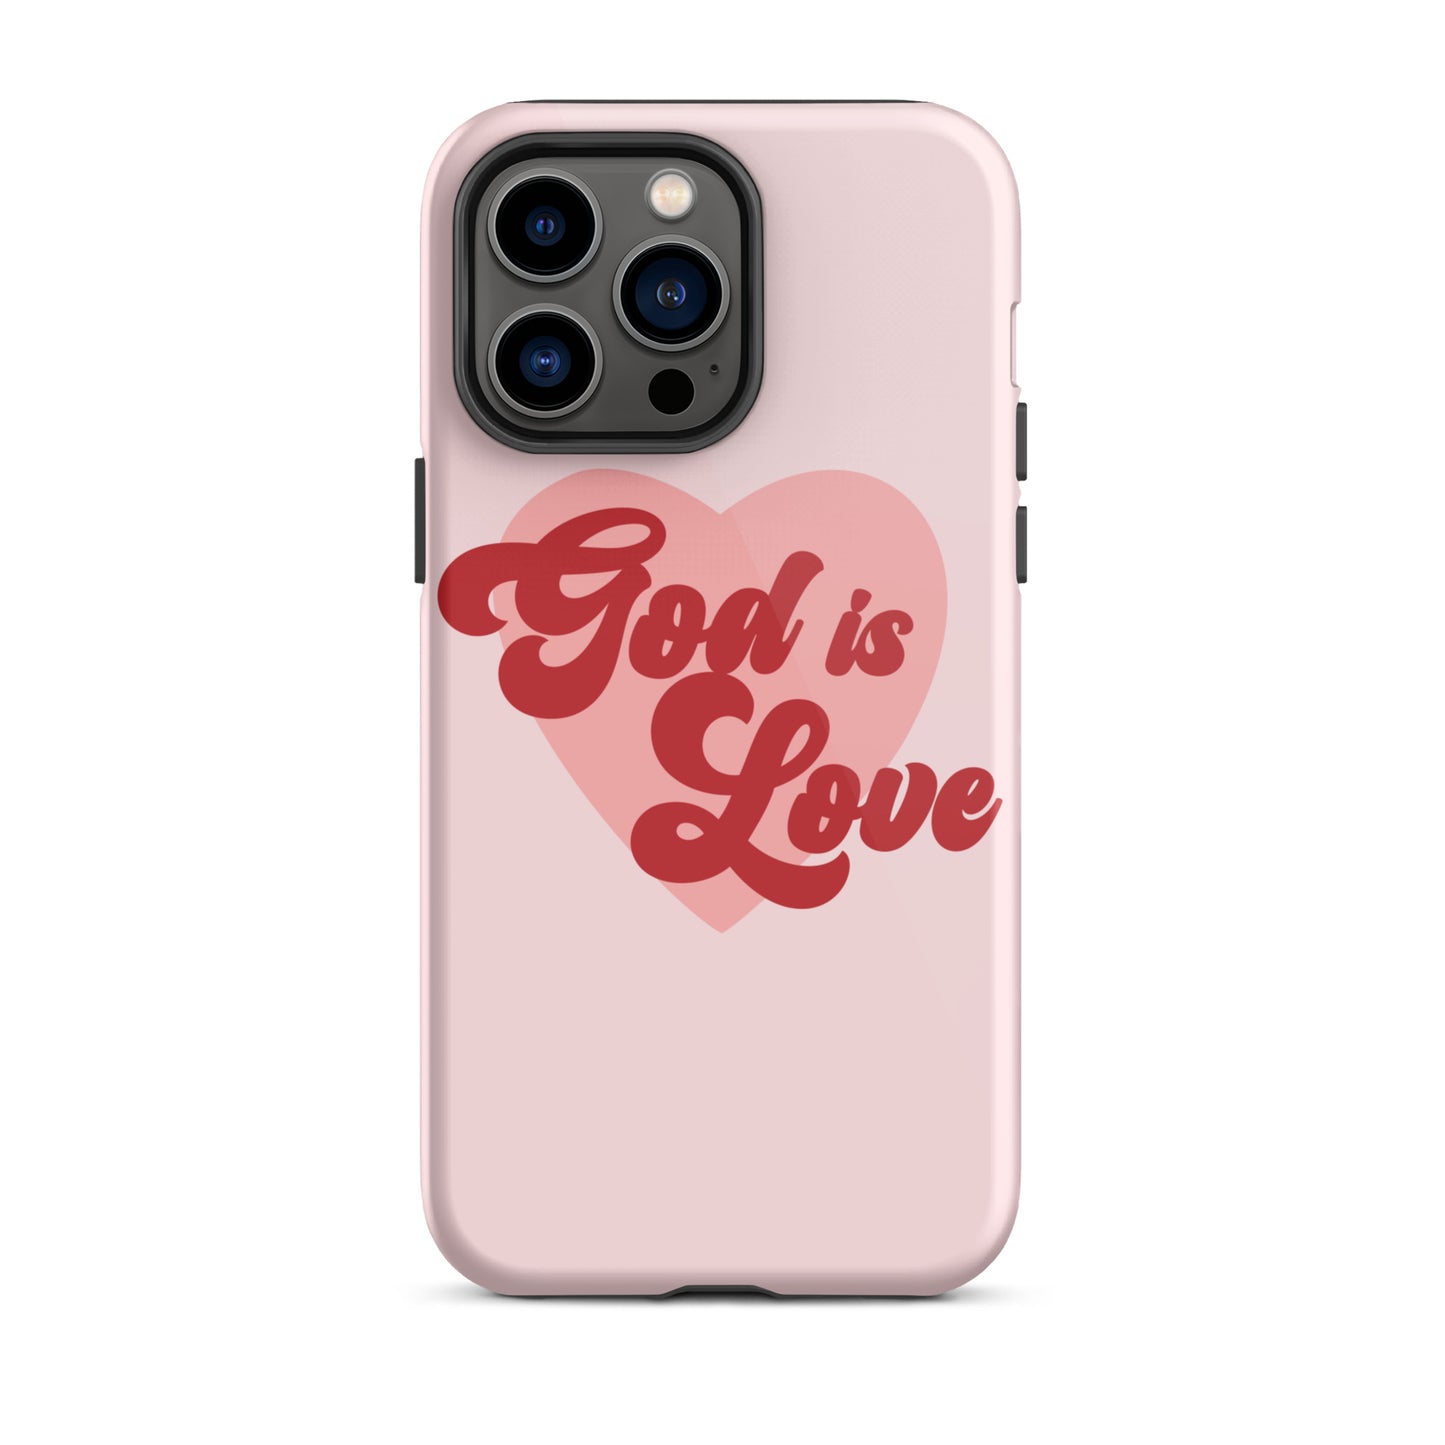 God is Love - Whisper -  Tough iPhone case for iPhone 11 Pro Max & Mini, 12 Pro Max & Mini, 13 Pro Max & Mini, 14 Pro Max & Mini